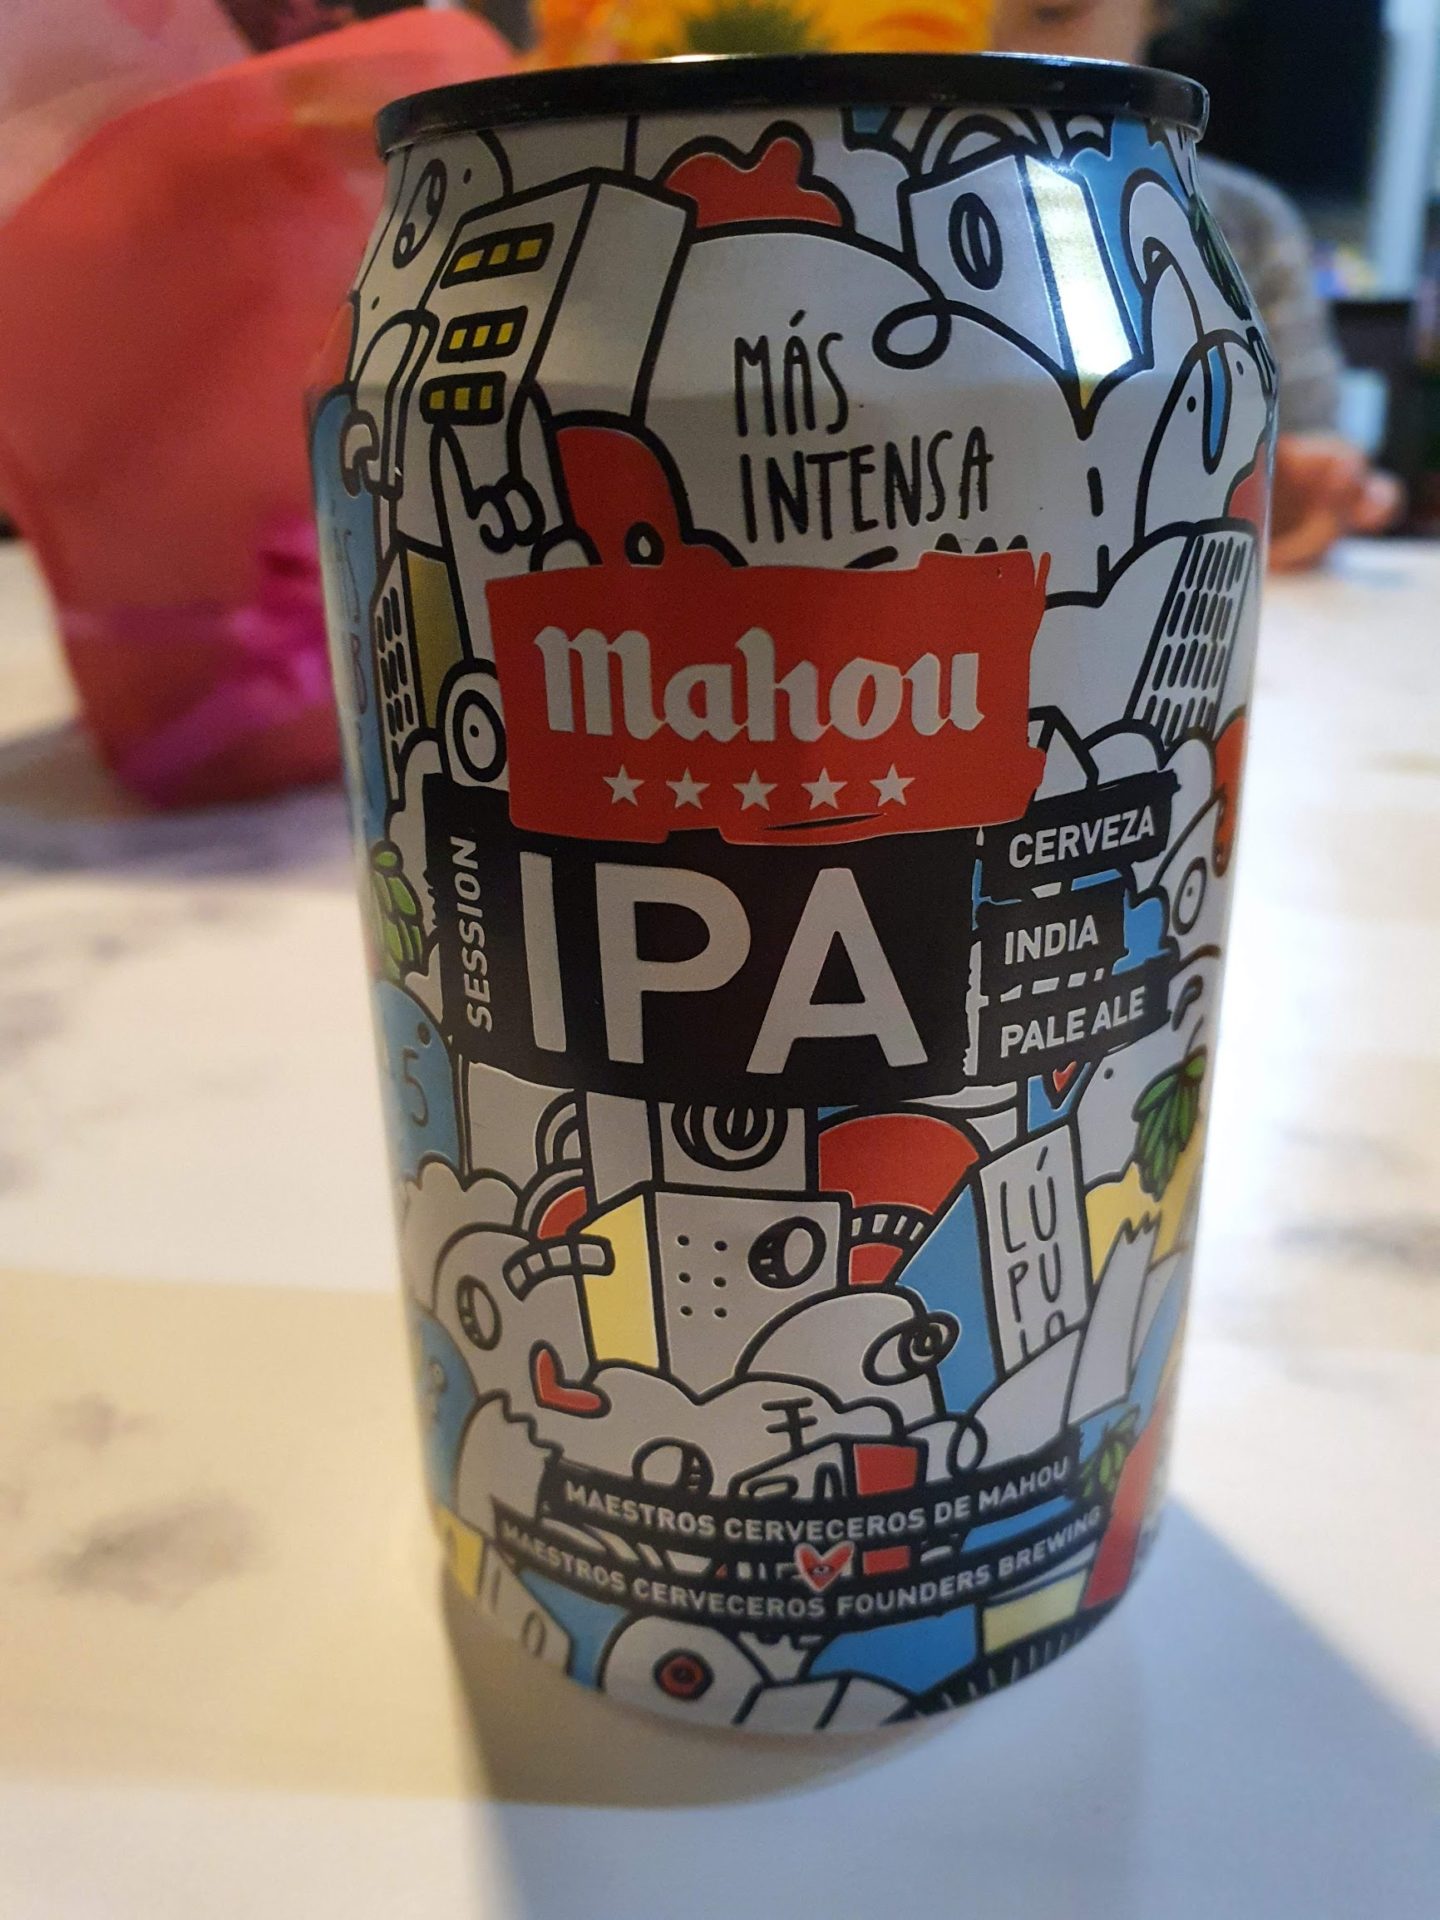 Mahou マオウ ビール